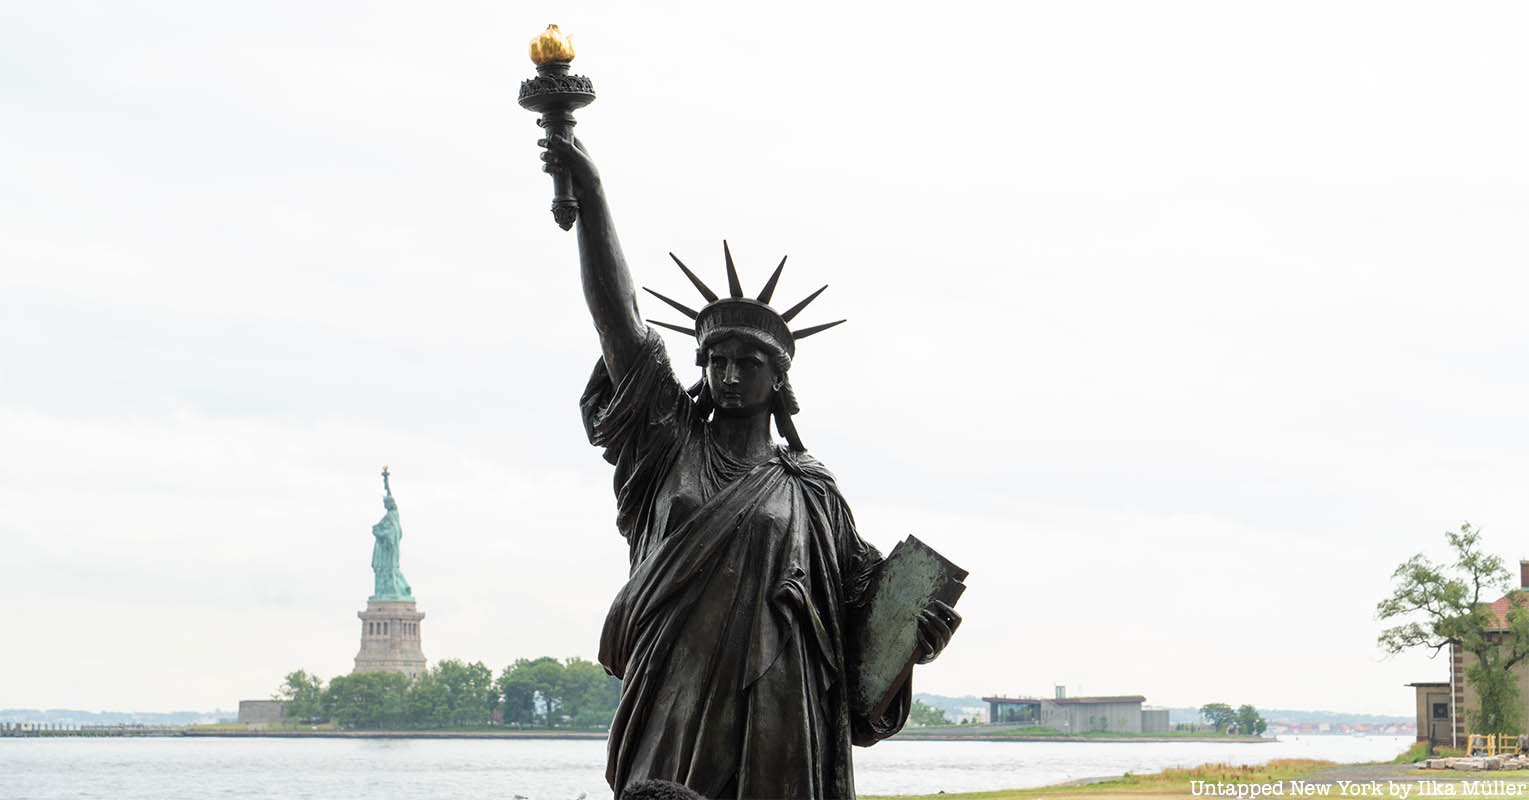 Statue of Liberty's Little Sister replica on Ellis Island